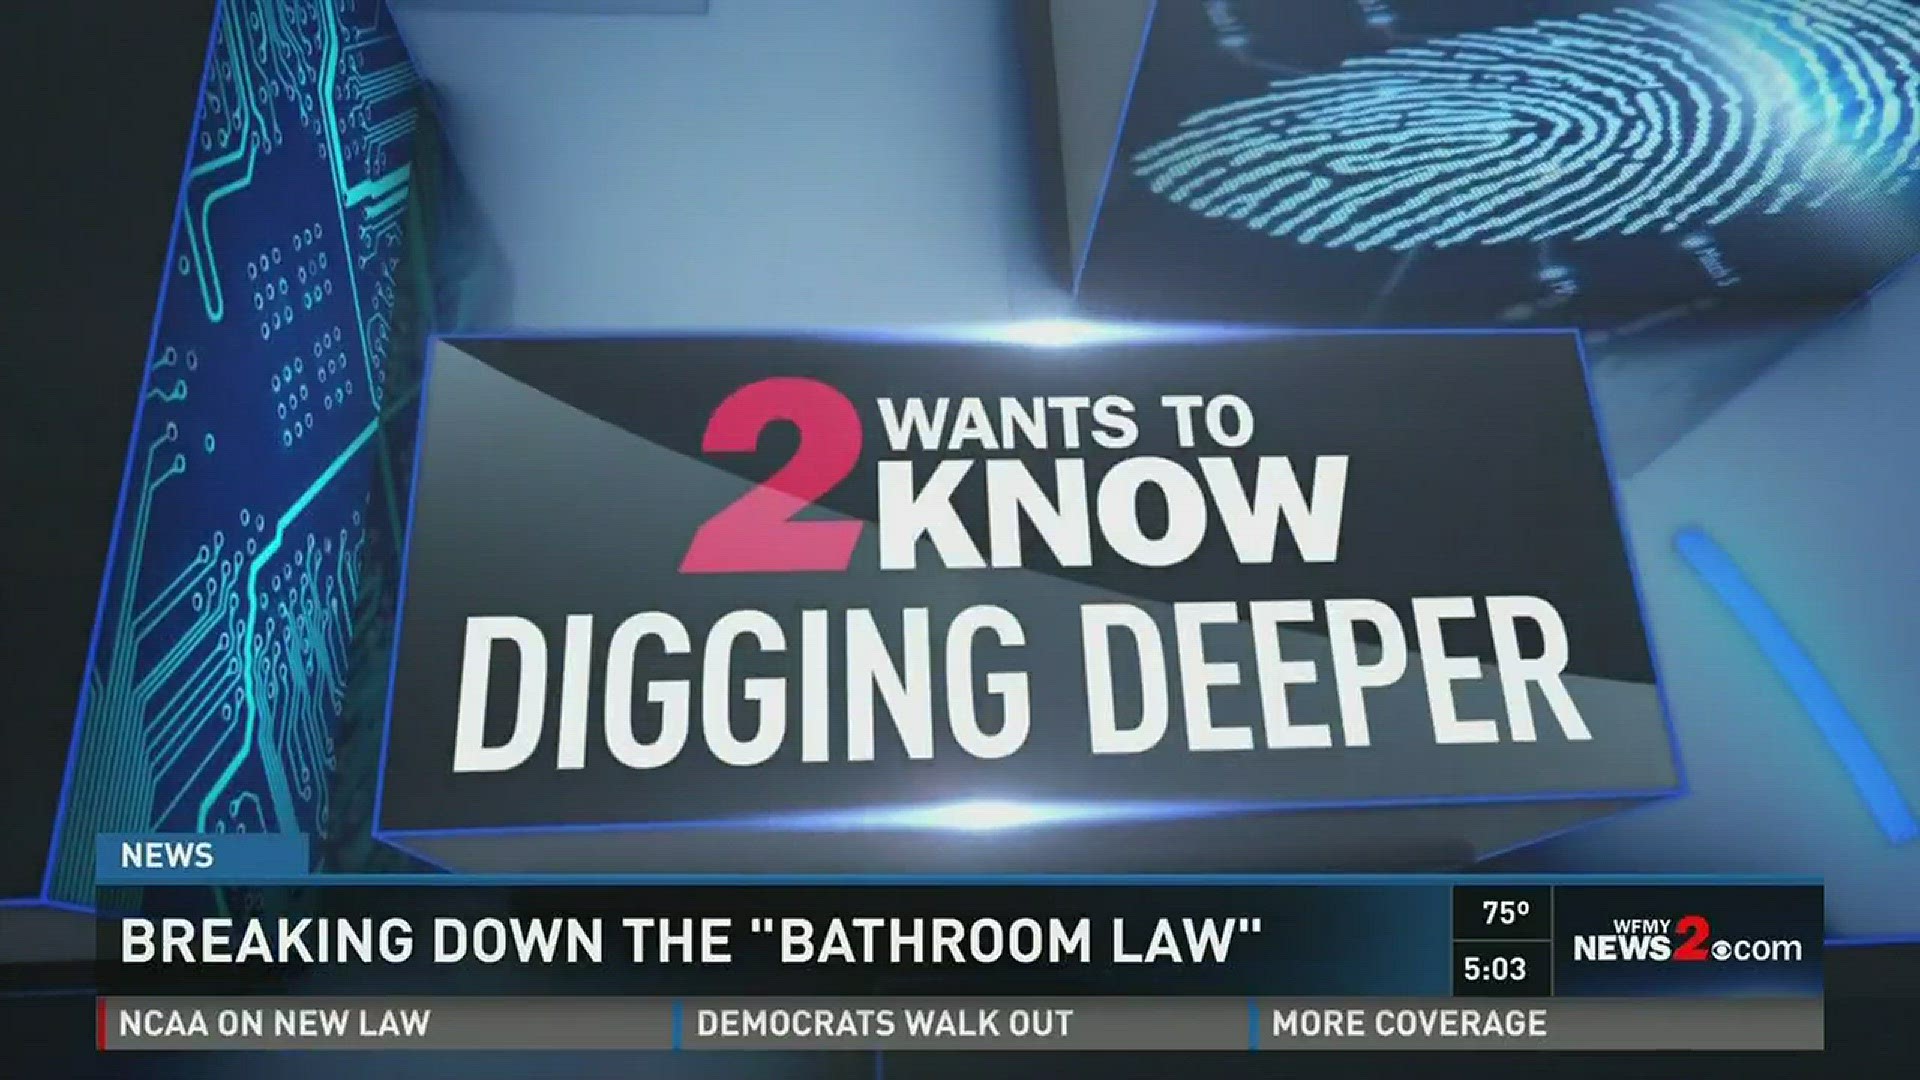 "Breaking Down The "Bathroom Law""